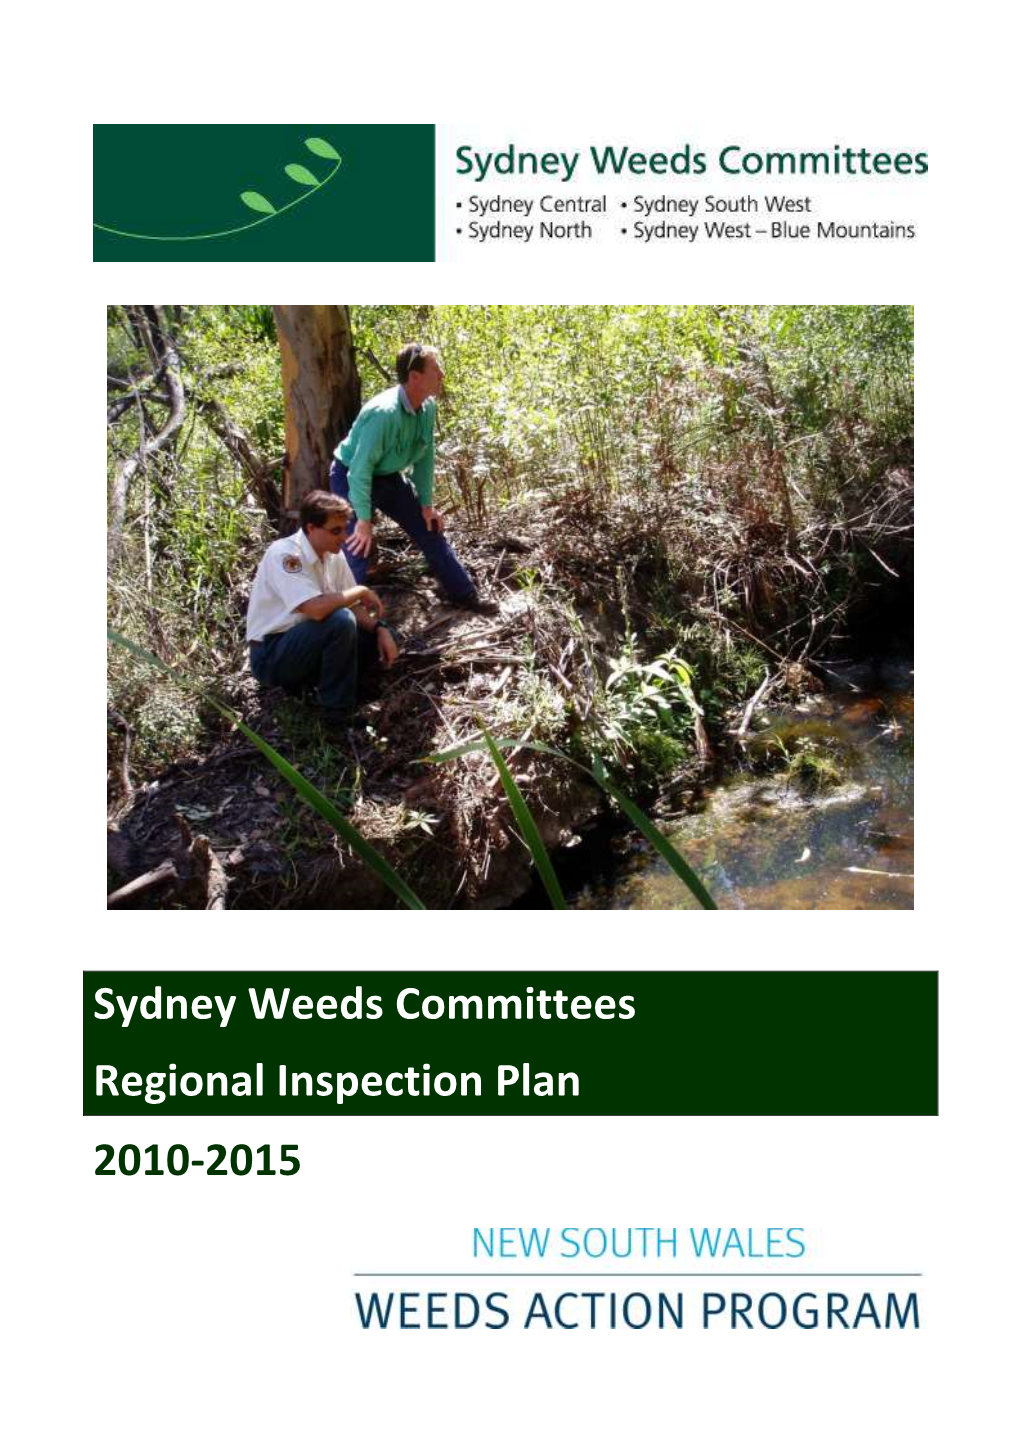 Sydney Weeds Committees Regional Inspection Plan 2010-2015